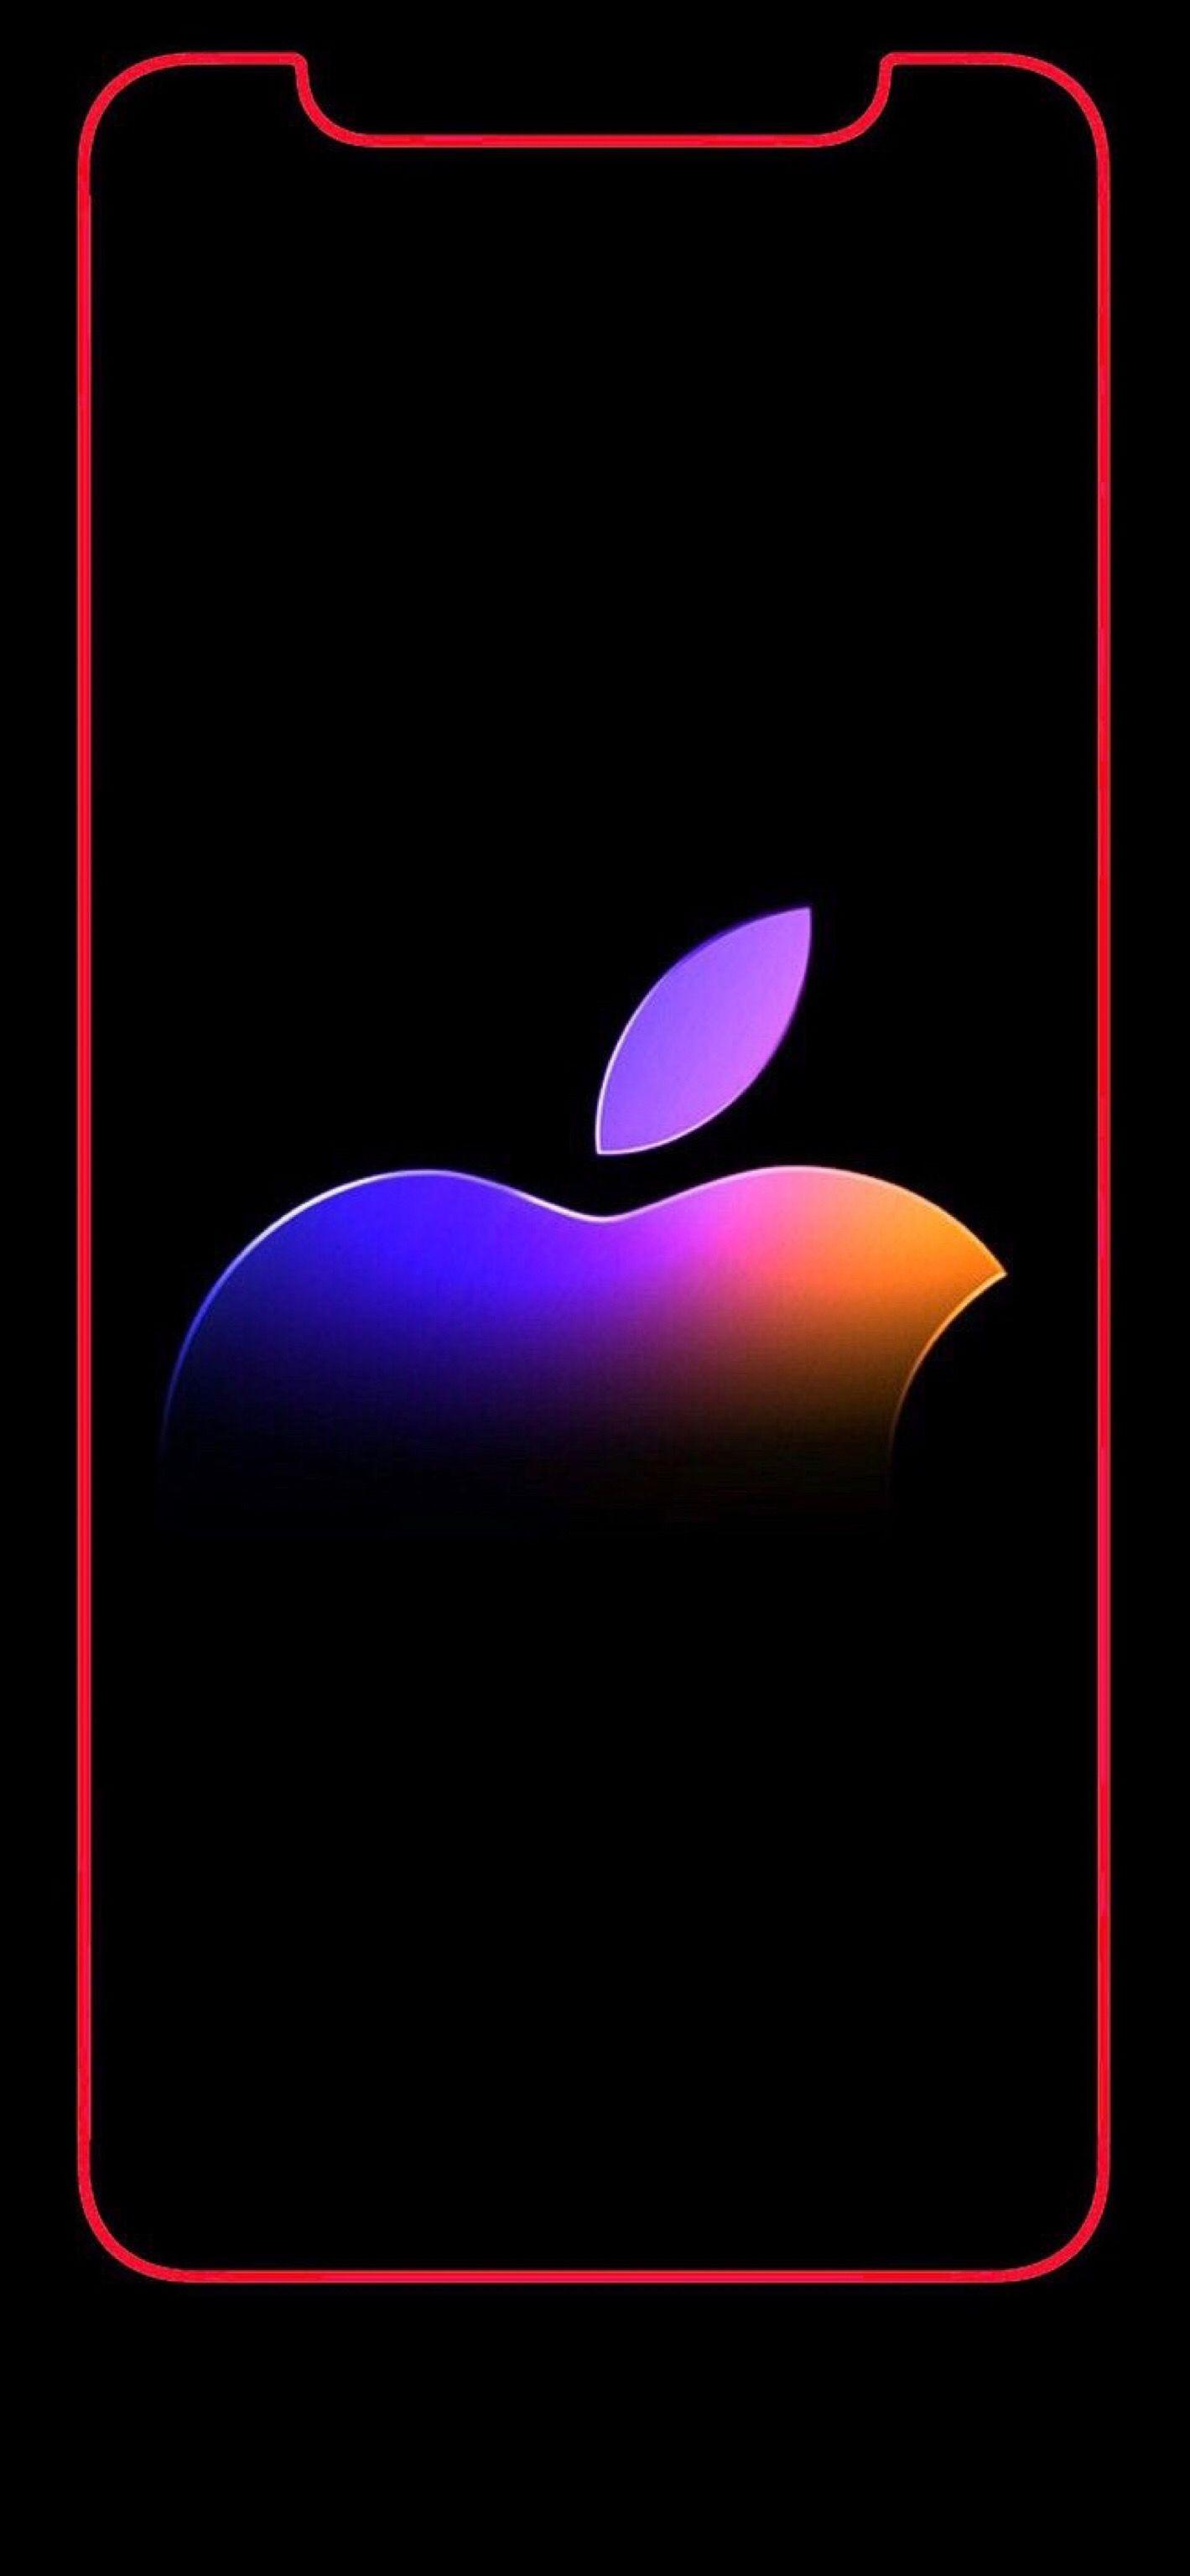 Wallpaper iPhone X logo rainbow 4. IPhone X